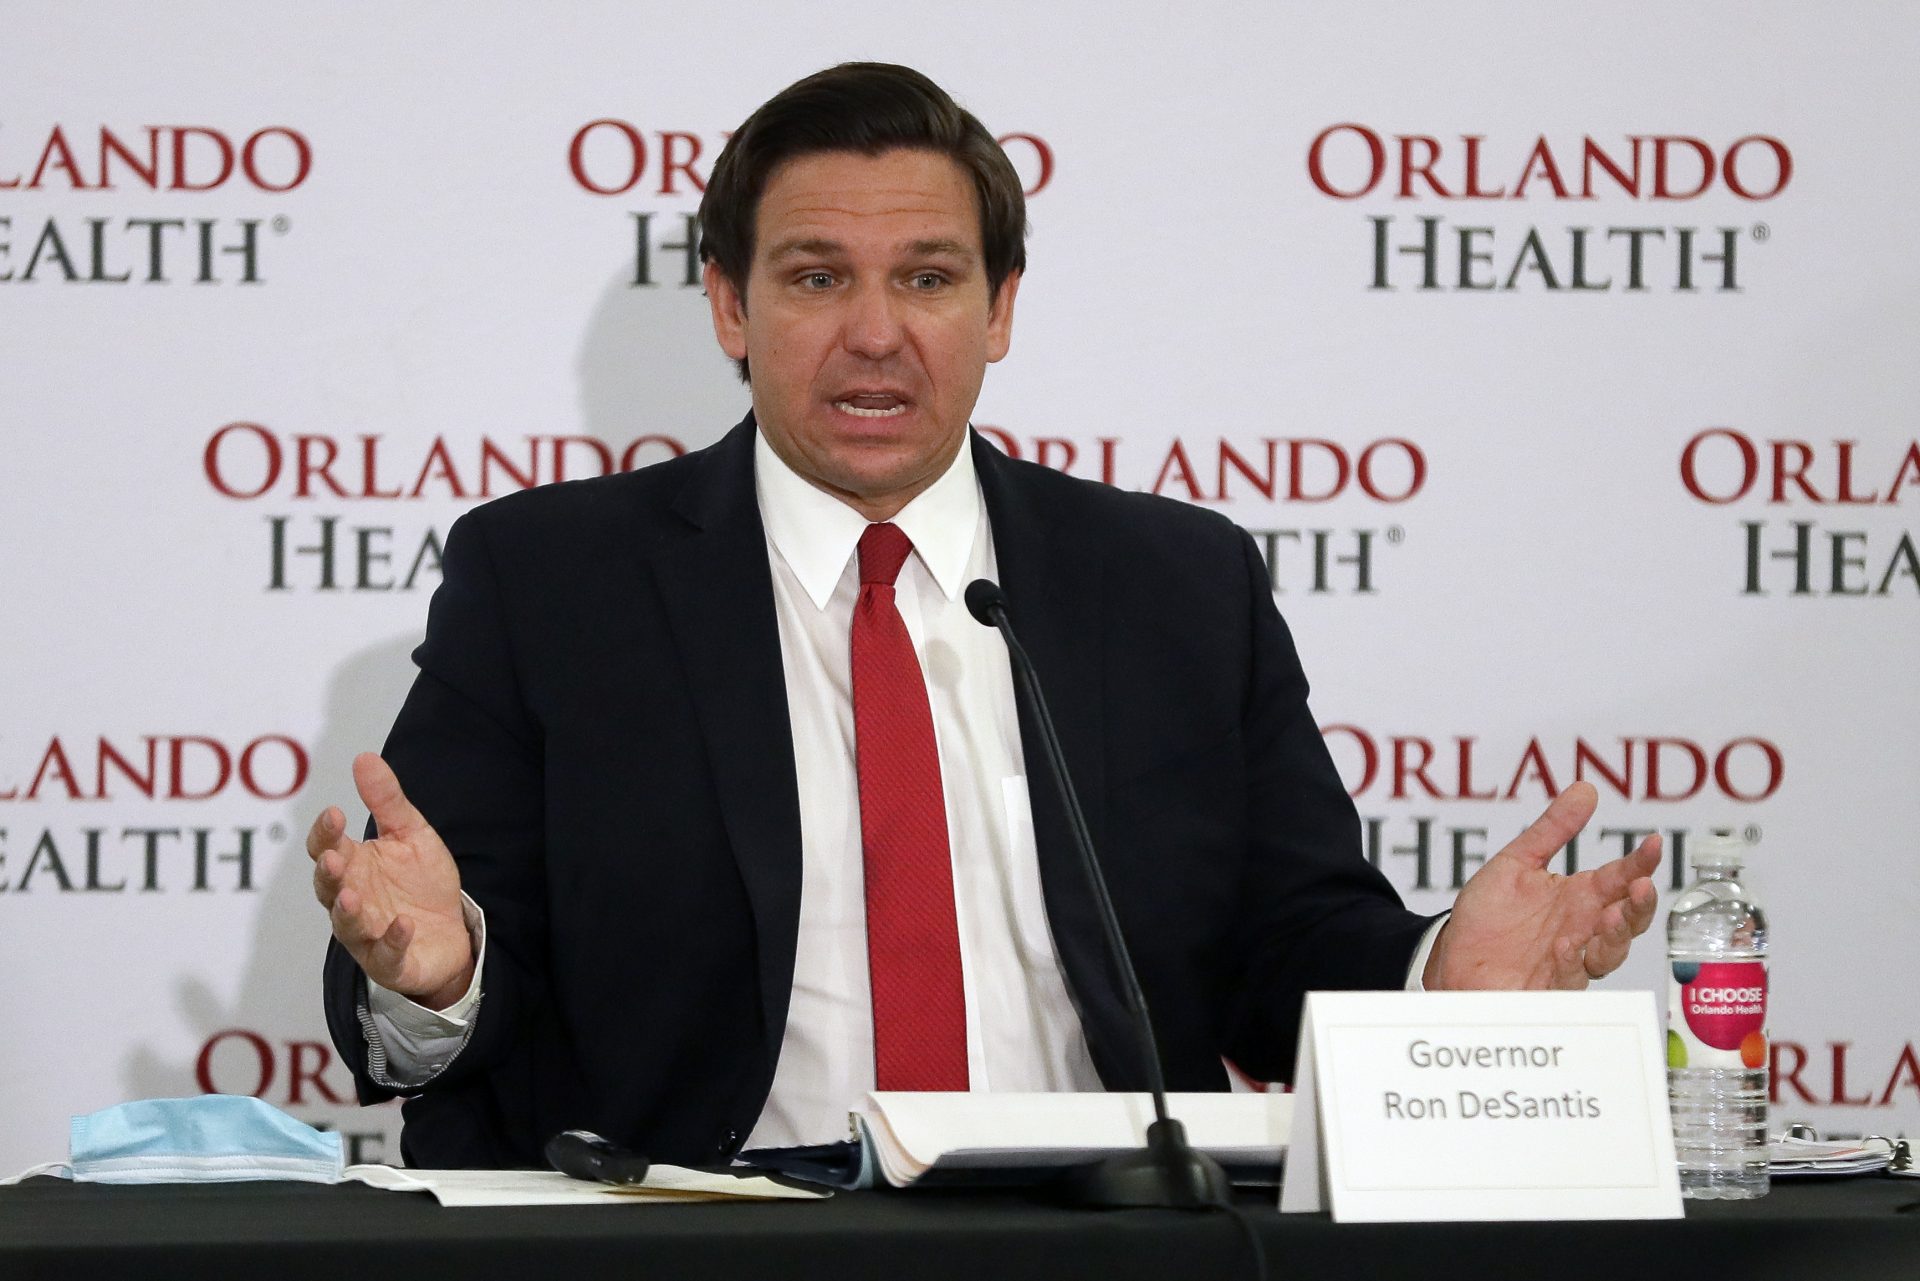 Florida Gov. Ron DeSantis speaks at a news conference at Orlando Regional Medical Center Tuesday, June 23, 2020, in Orlando, Fla. DeSantis spoke about Florida's caseload of coronavirus topping 100,000.